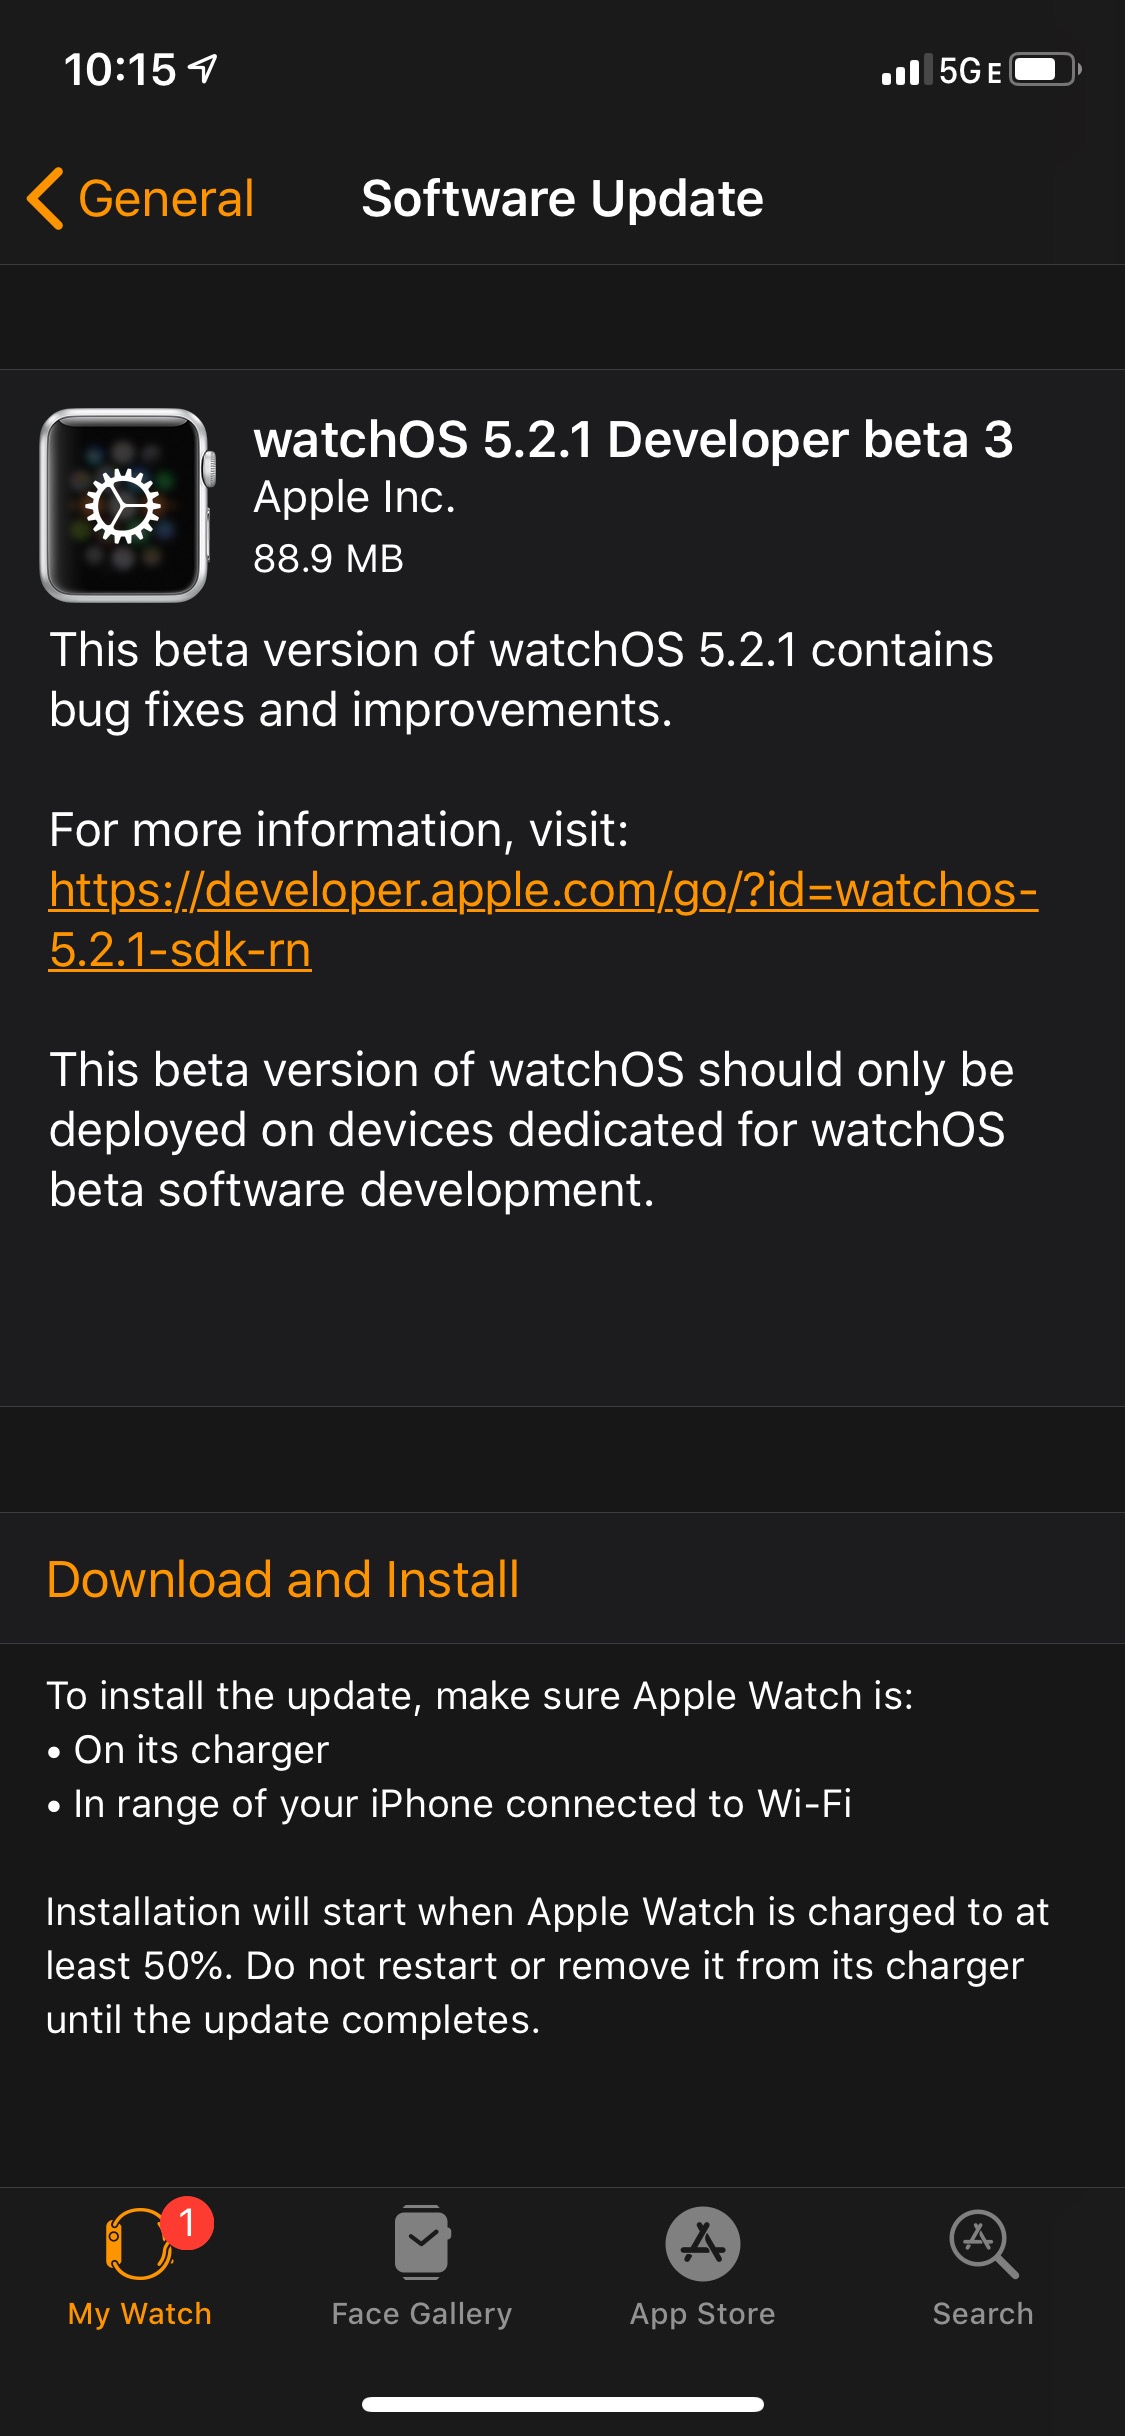 Apple Seeds tvOS 12.3 Beta 3 and watchOS 5.2.1 Beta 3 to Developers [Download]